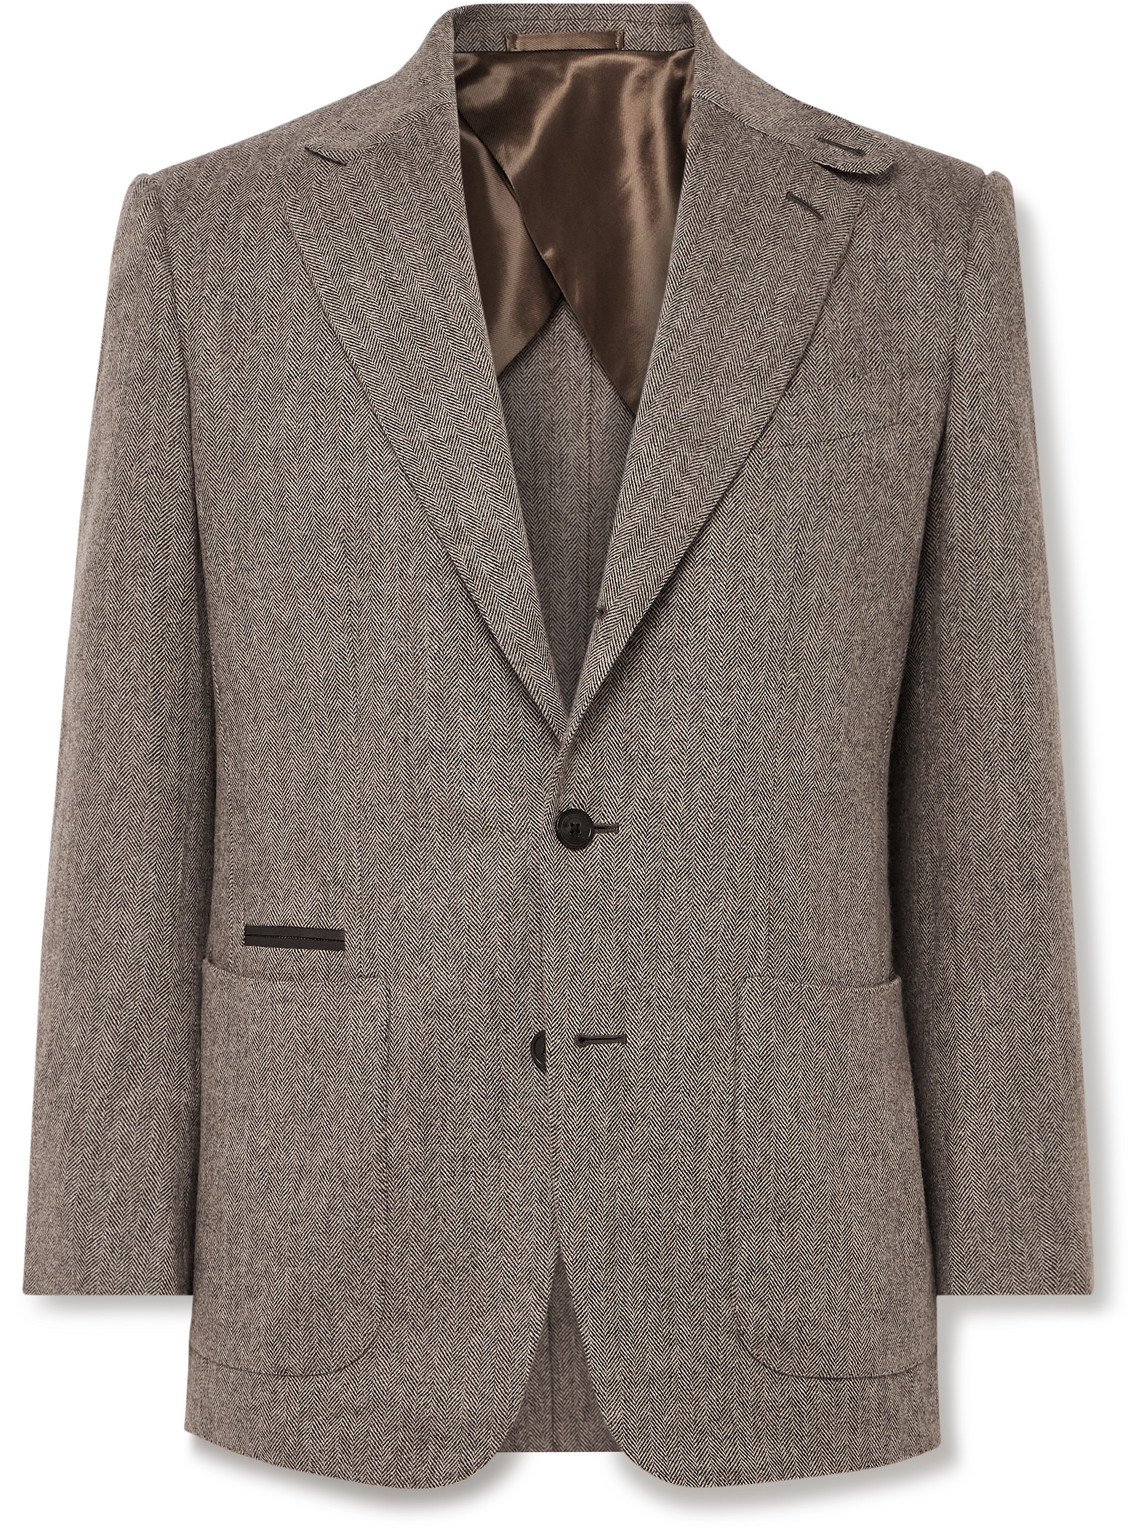 Hacking Leather-Trimmed Herringbone Wool and Cashmere-Blend Tweed Blazer